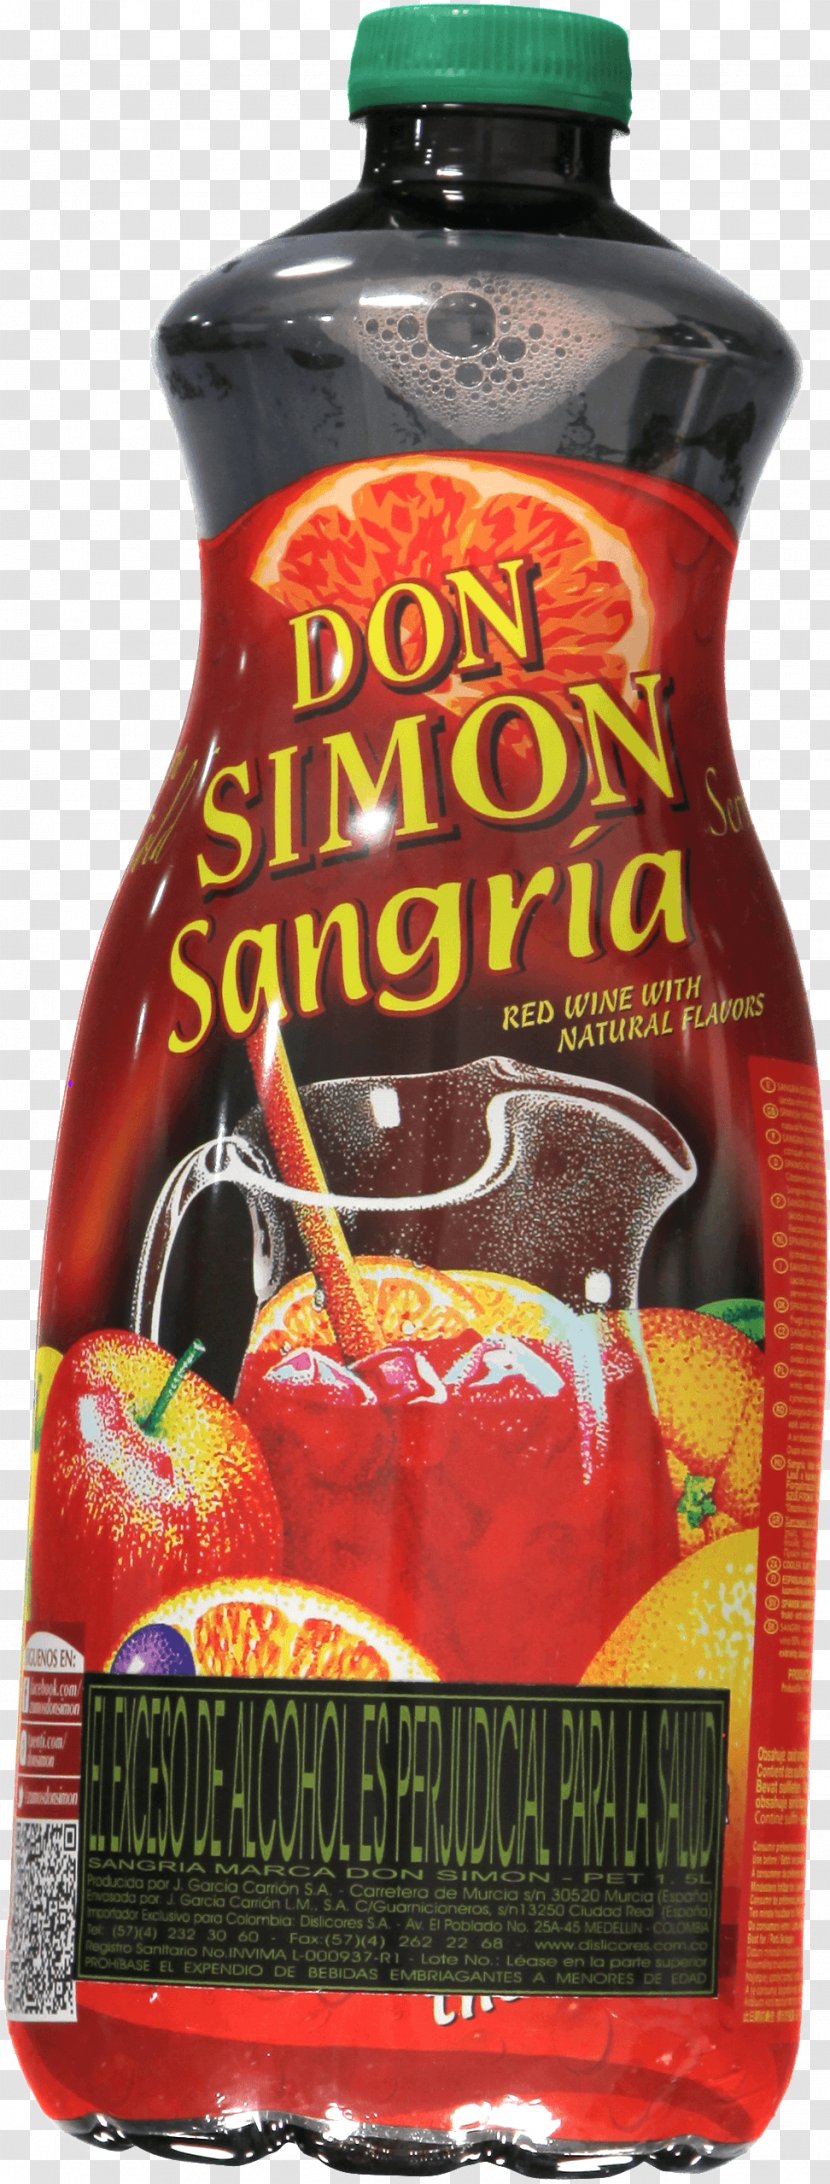 Sangria Sweet Chili Sauce Don Simon Spanish Cuisine Food - Sauces Transparent PNG